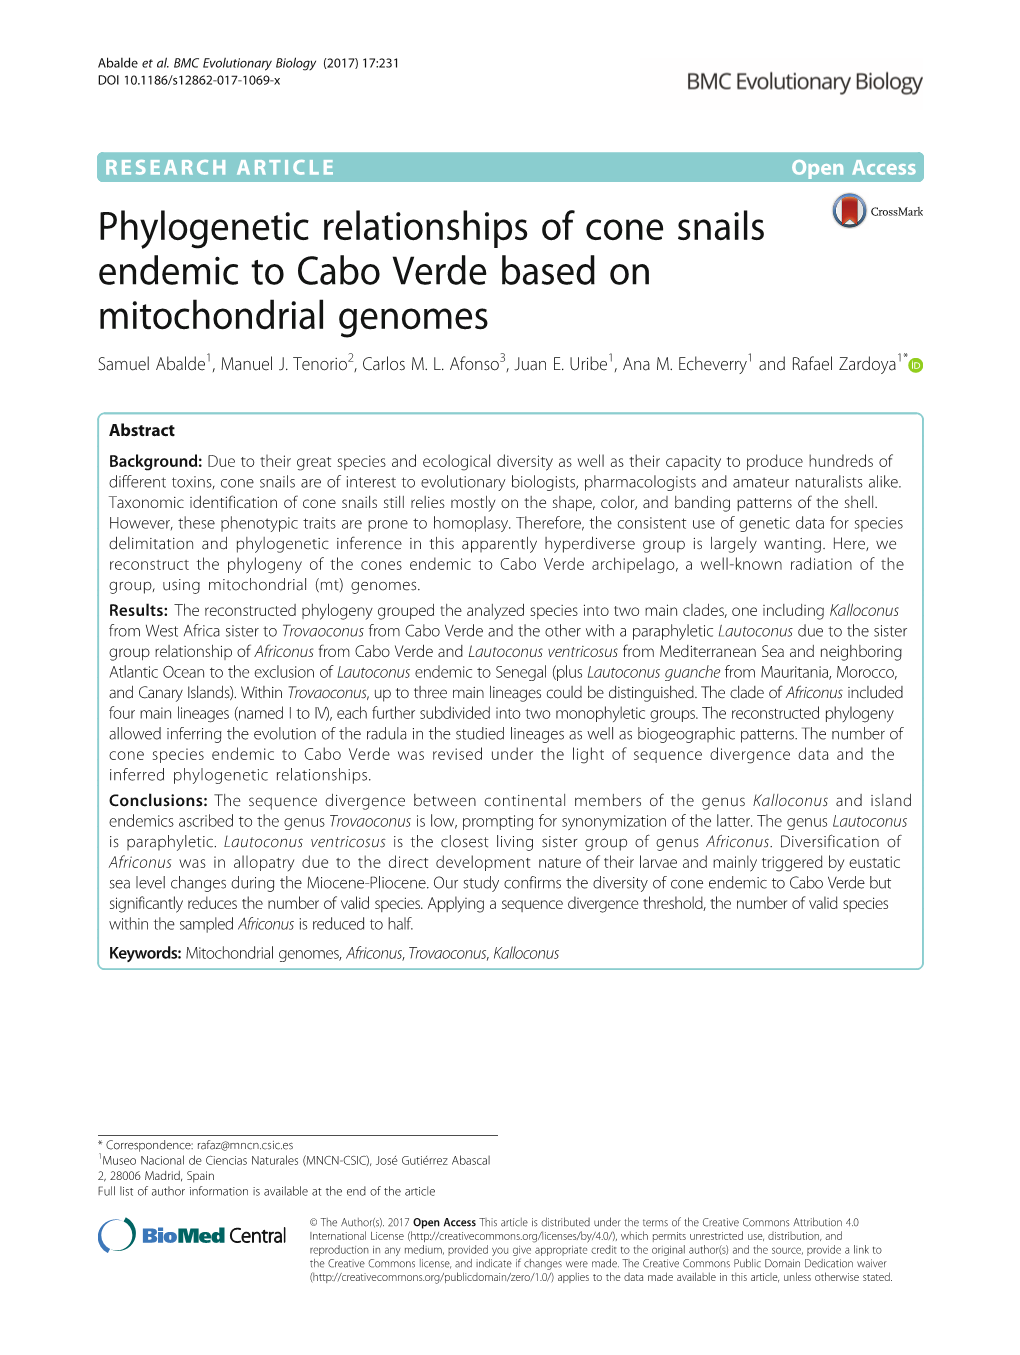 Phylogenetic Relationships of Cone Snails Endemic to Cabo Verde Based on Mitochondrial Genomes Samuel Abalde1, Manuel J